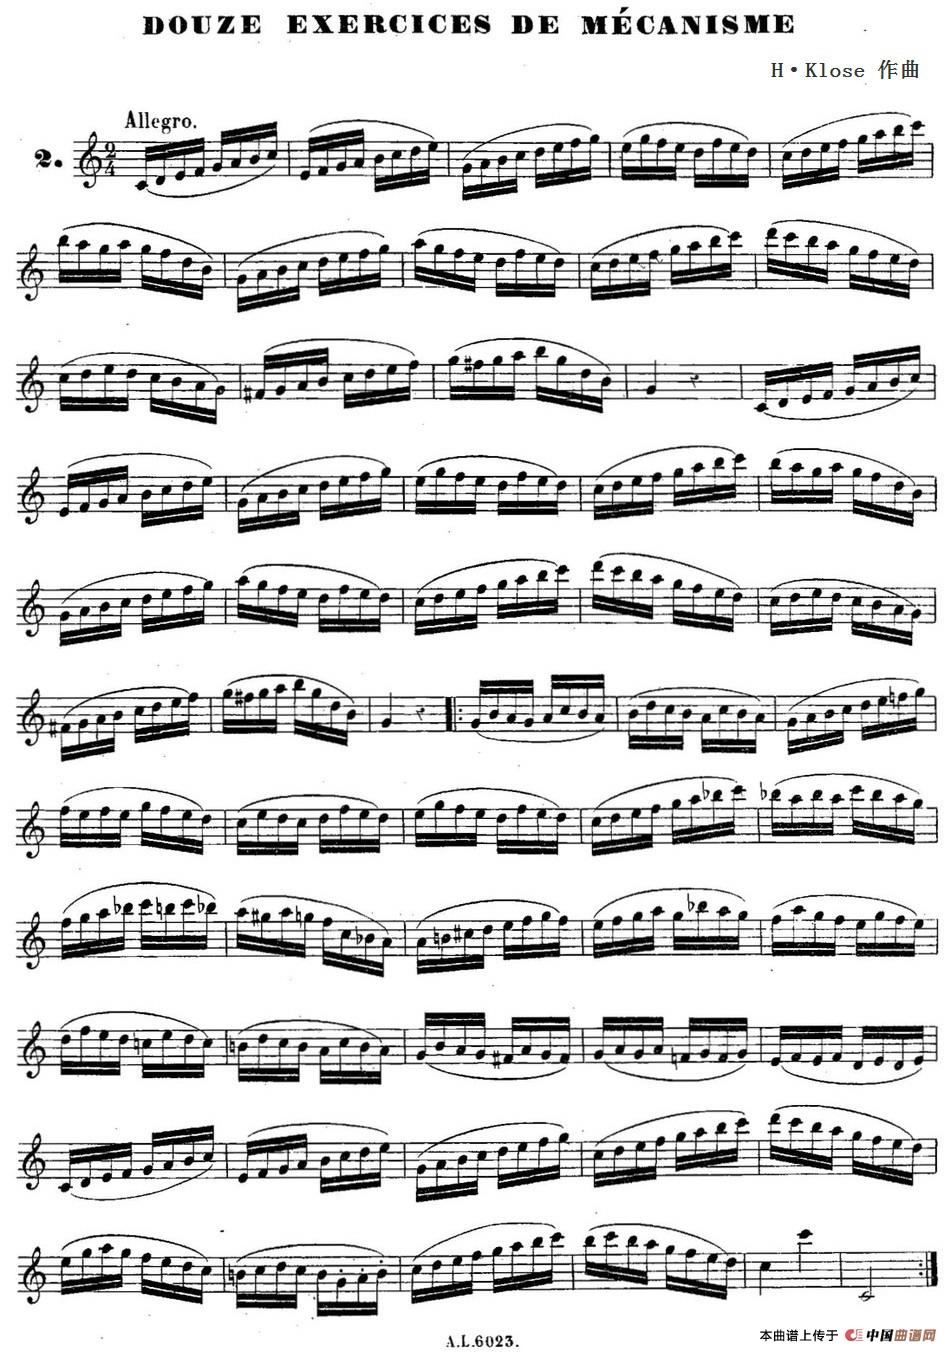 H·Klose练习曲（douze exercices de mecanisme—2）